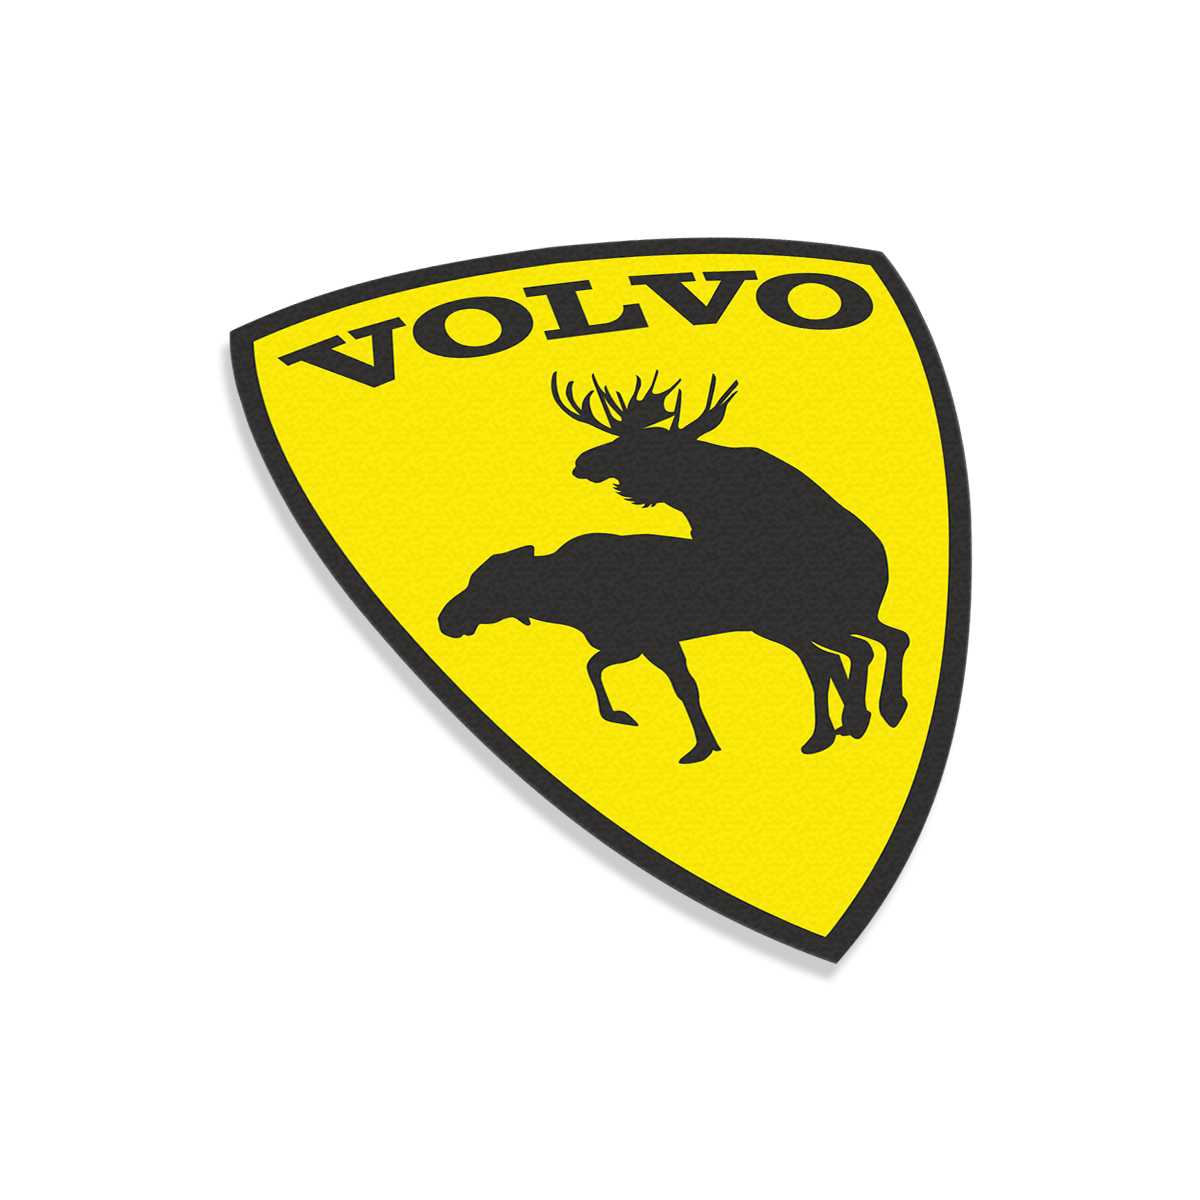 Вольво лось. Volvo Лось. Prancing Moose Volvo. Вольво Лось v60. Эмблема Лось Volvo.